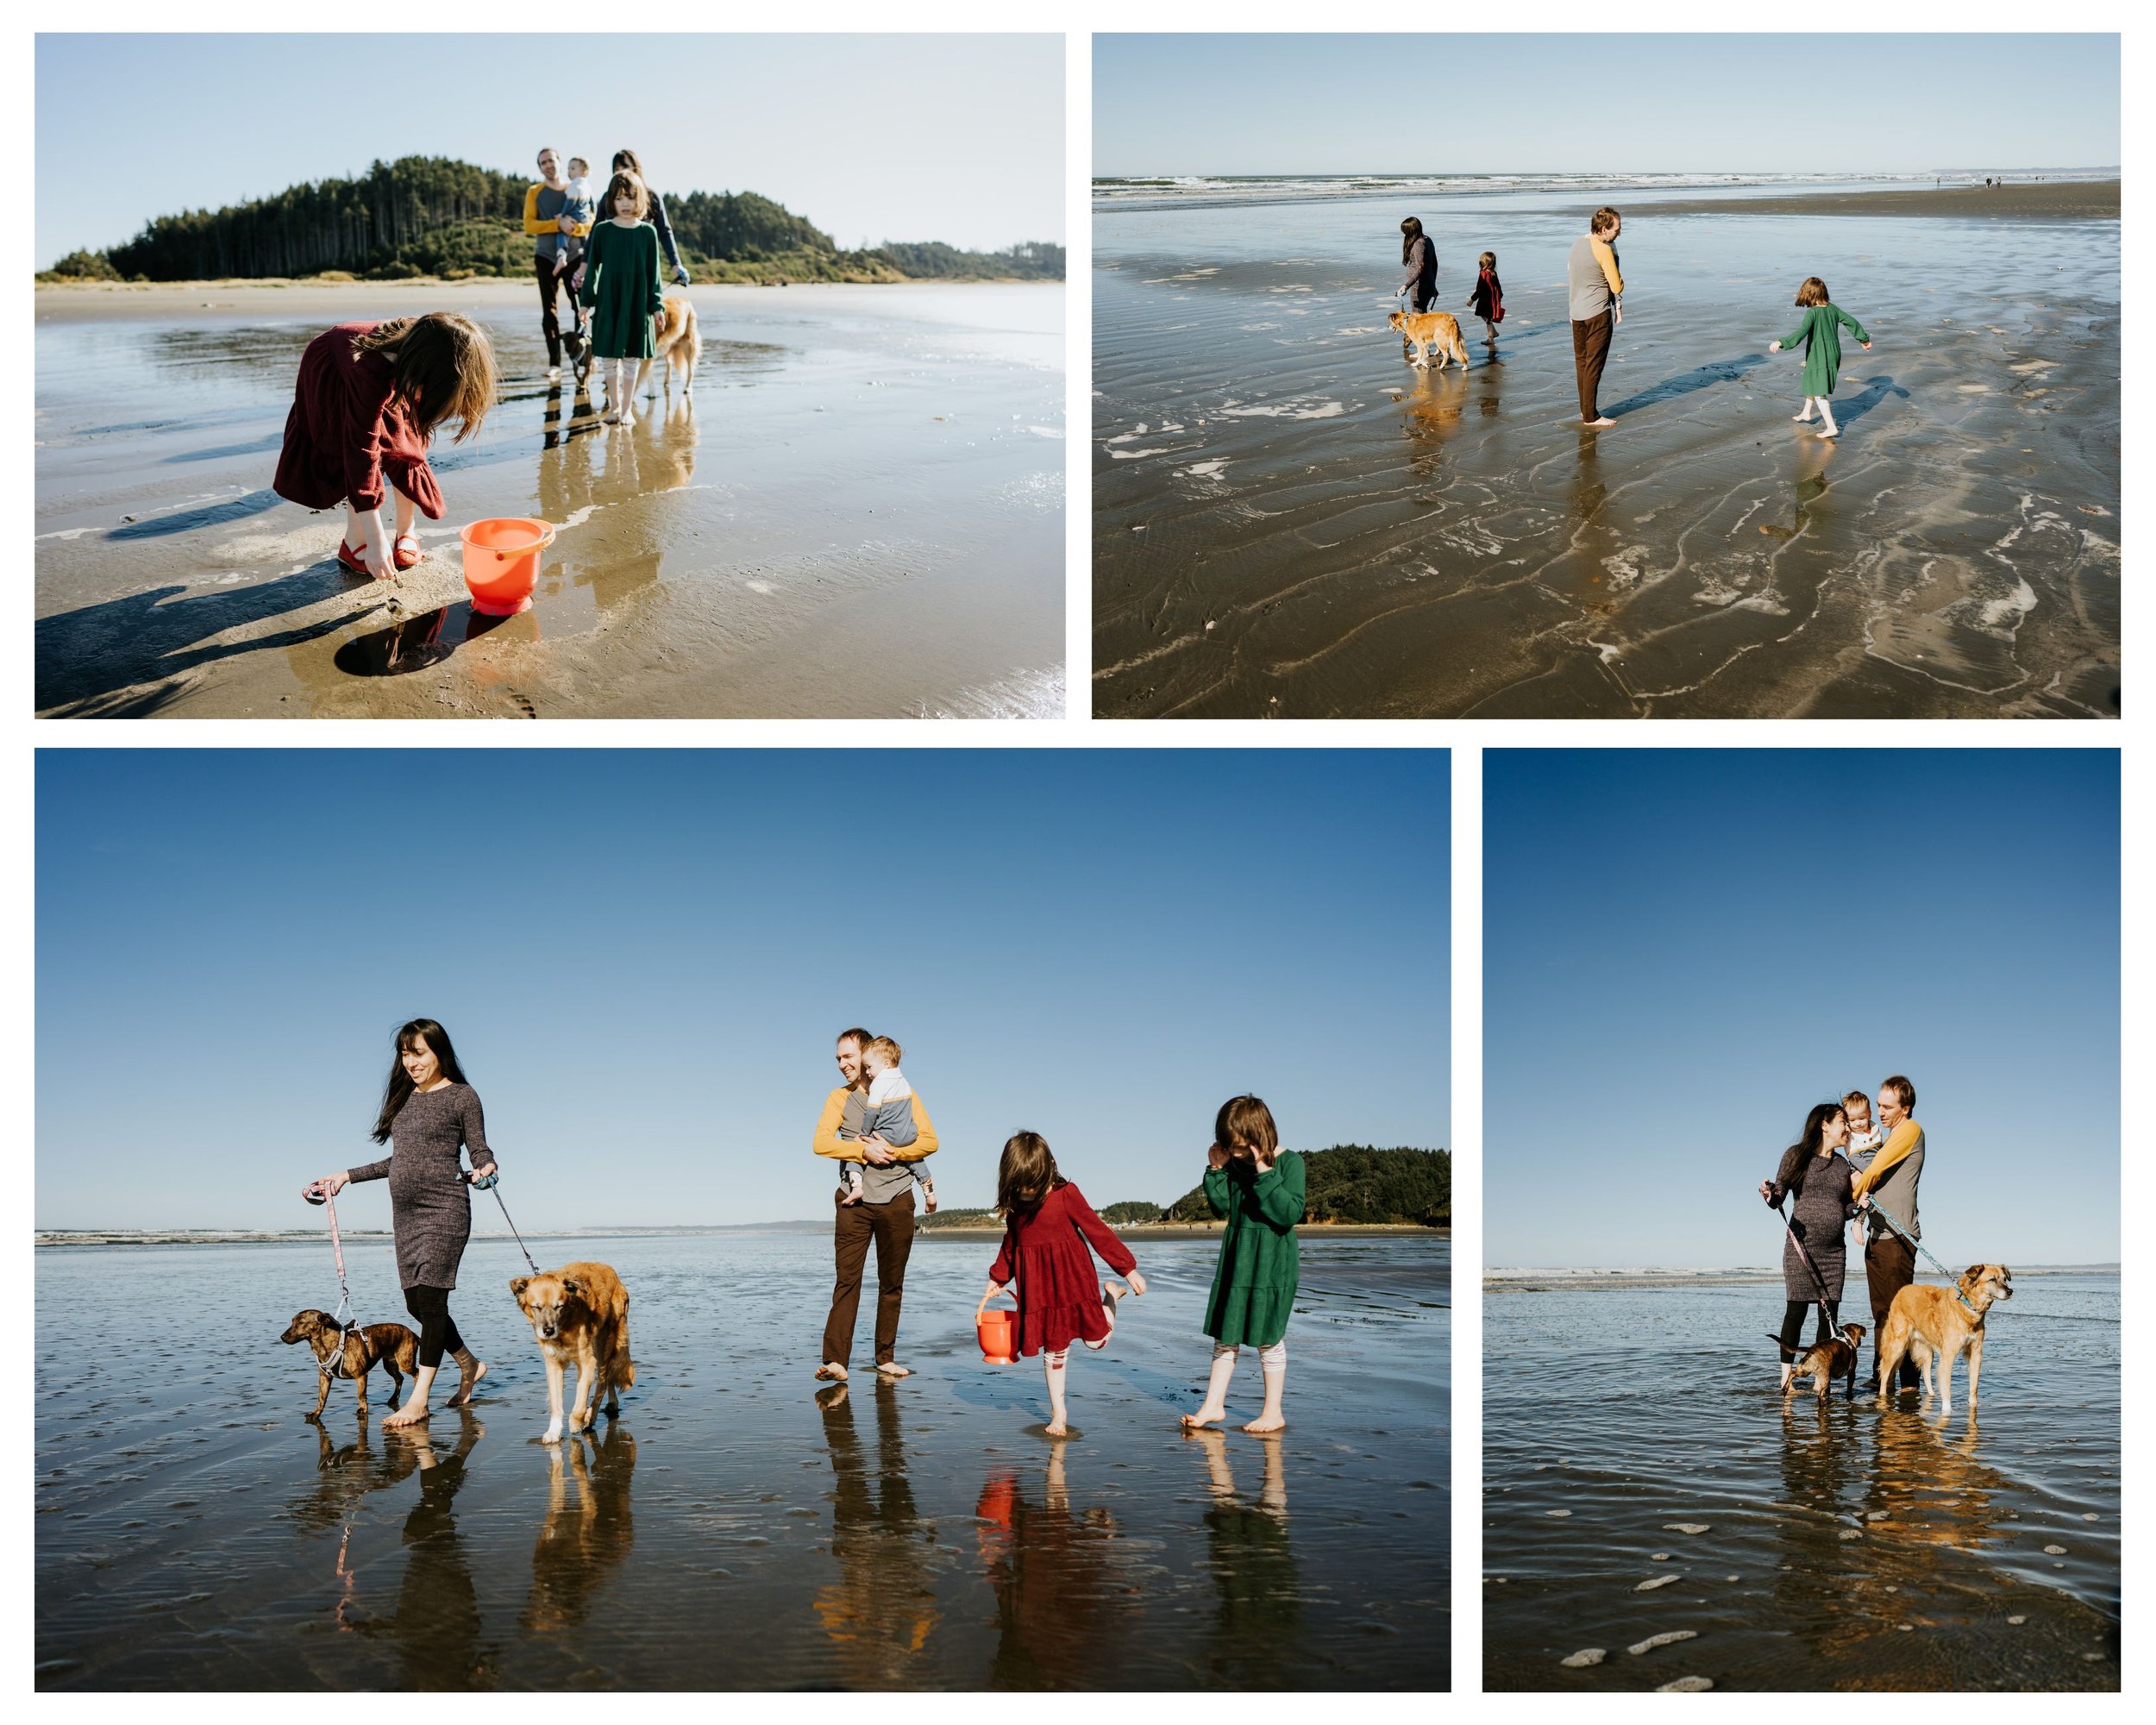 seabrook-washington-family-vacation-photos-beach-14.jpg